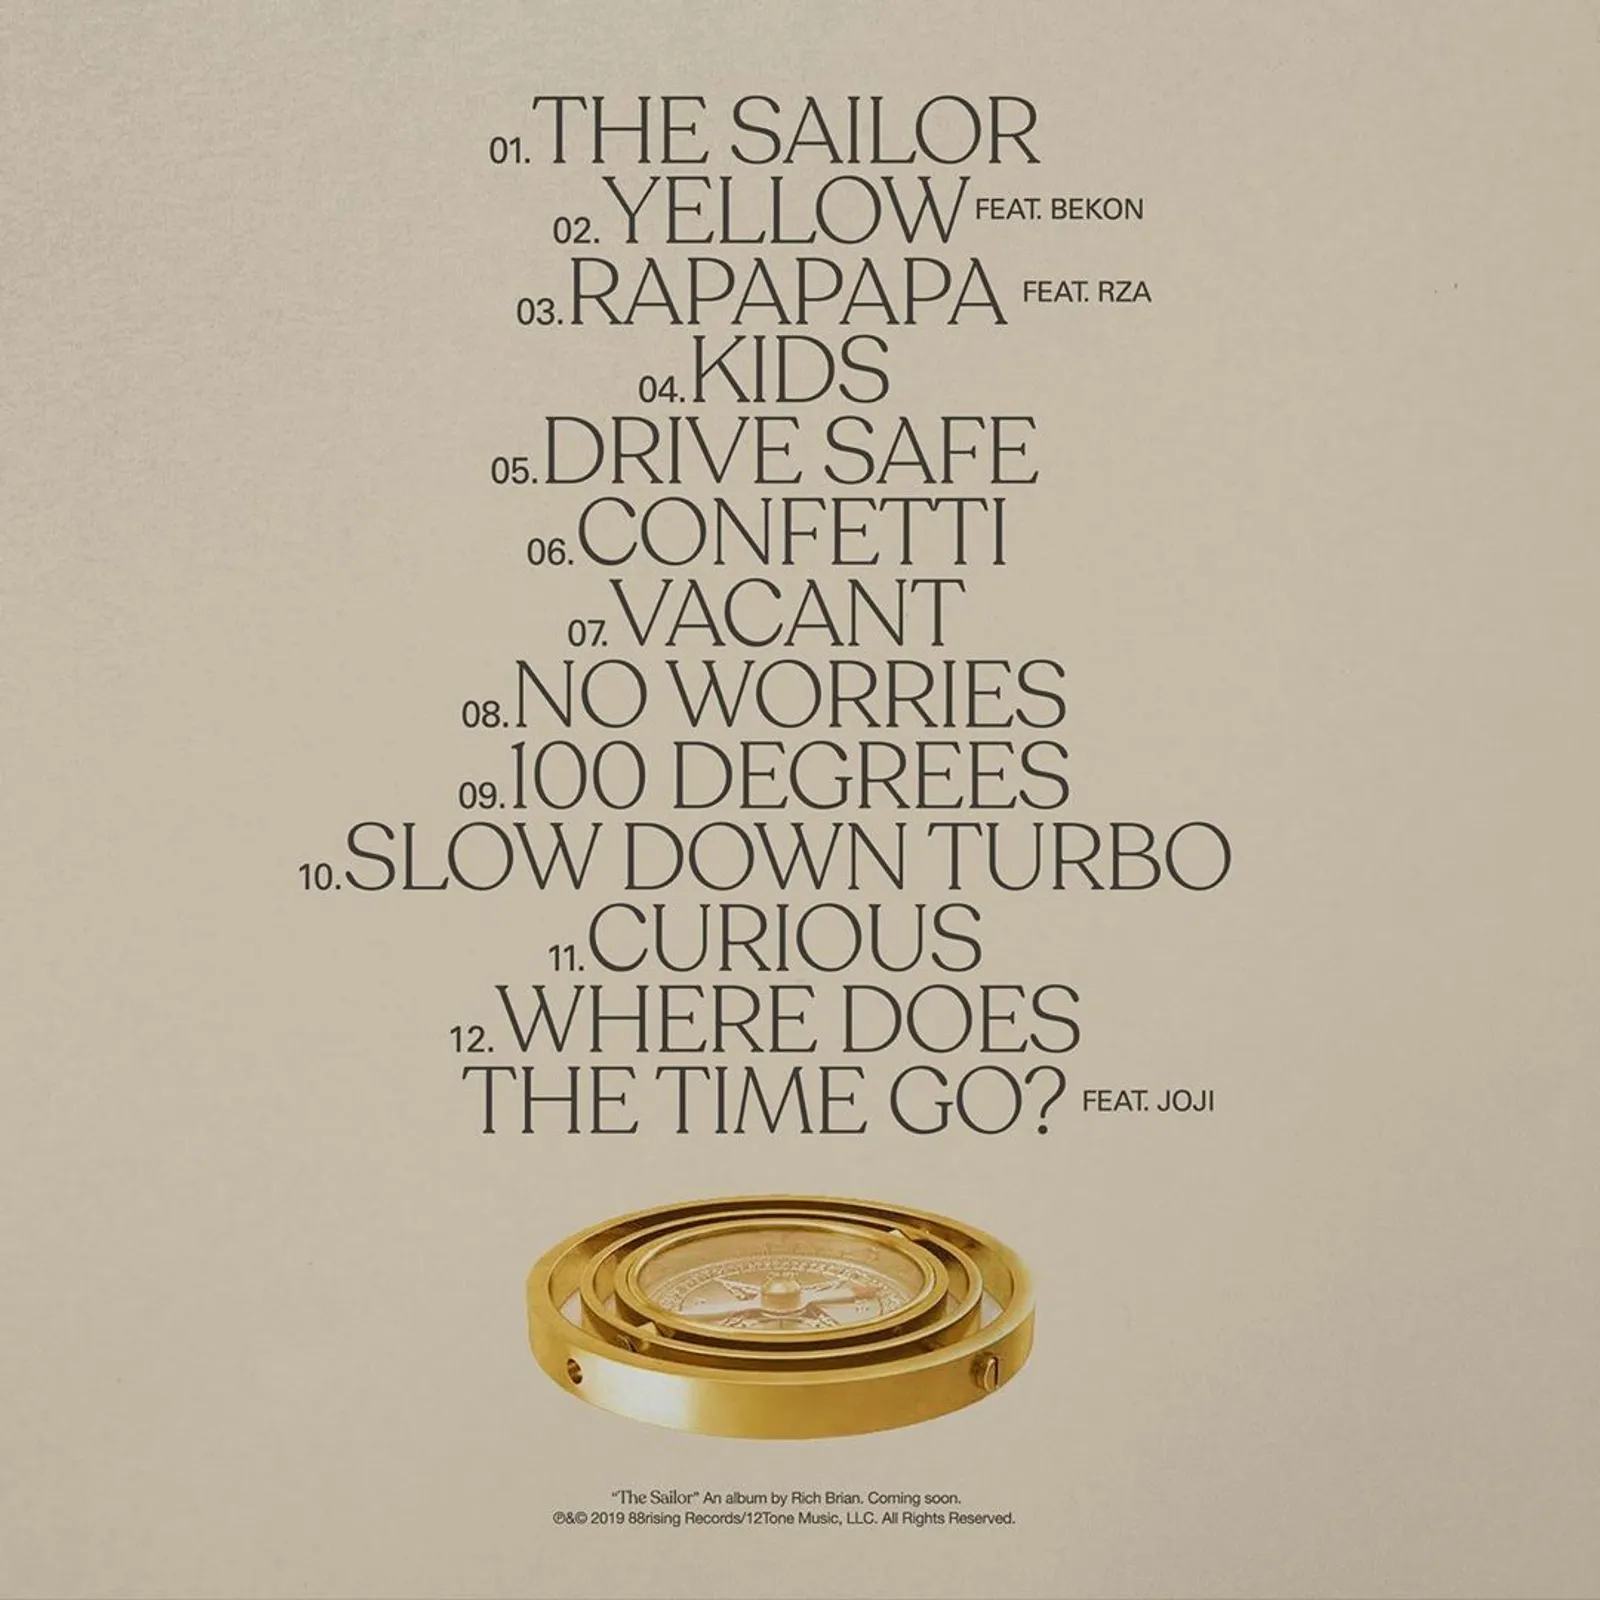 Daftar 12 Lagu di Album 'The Sailor' Rich Brian yang Wajib Kamu Dengar